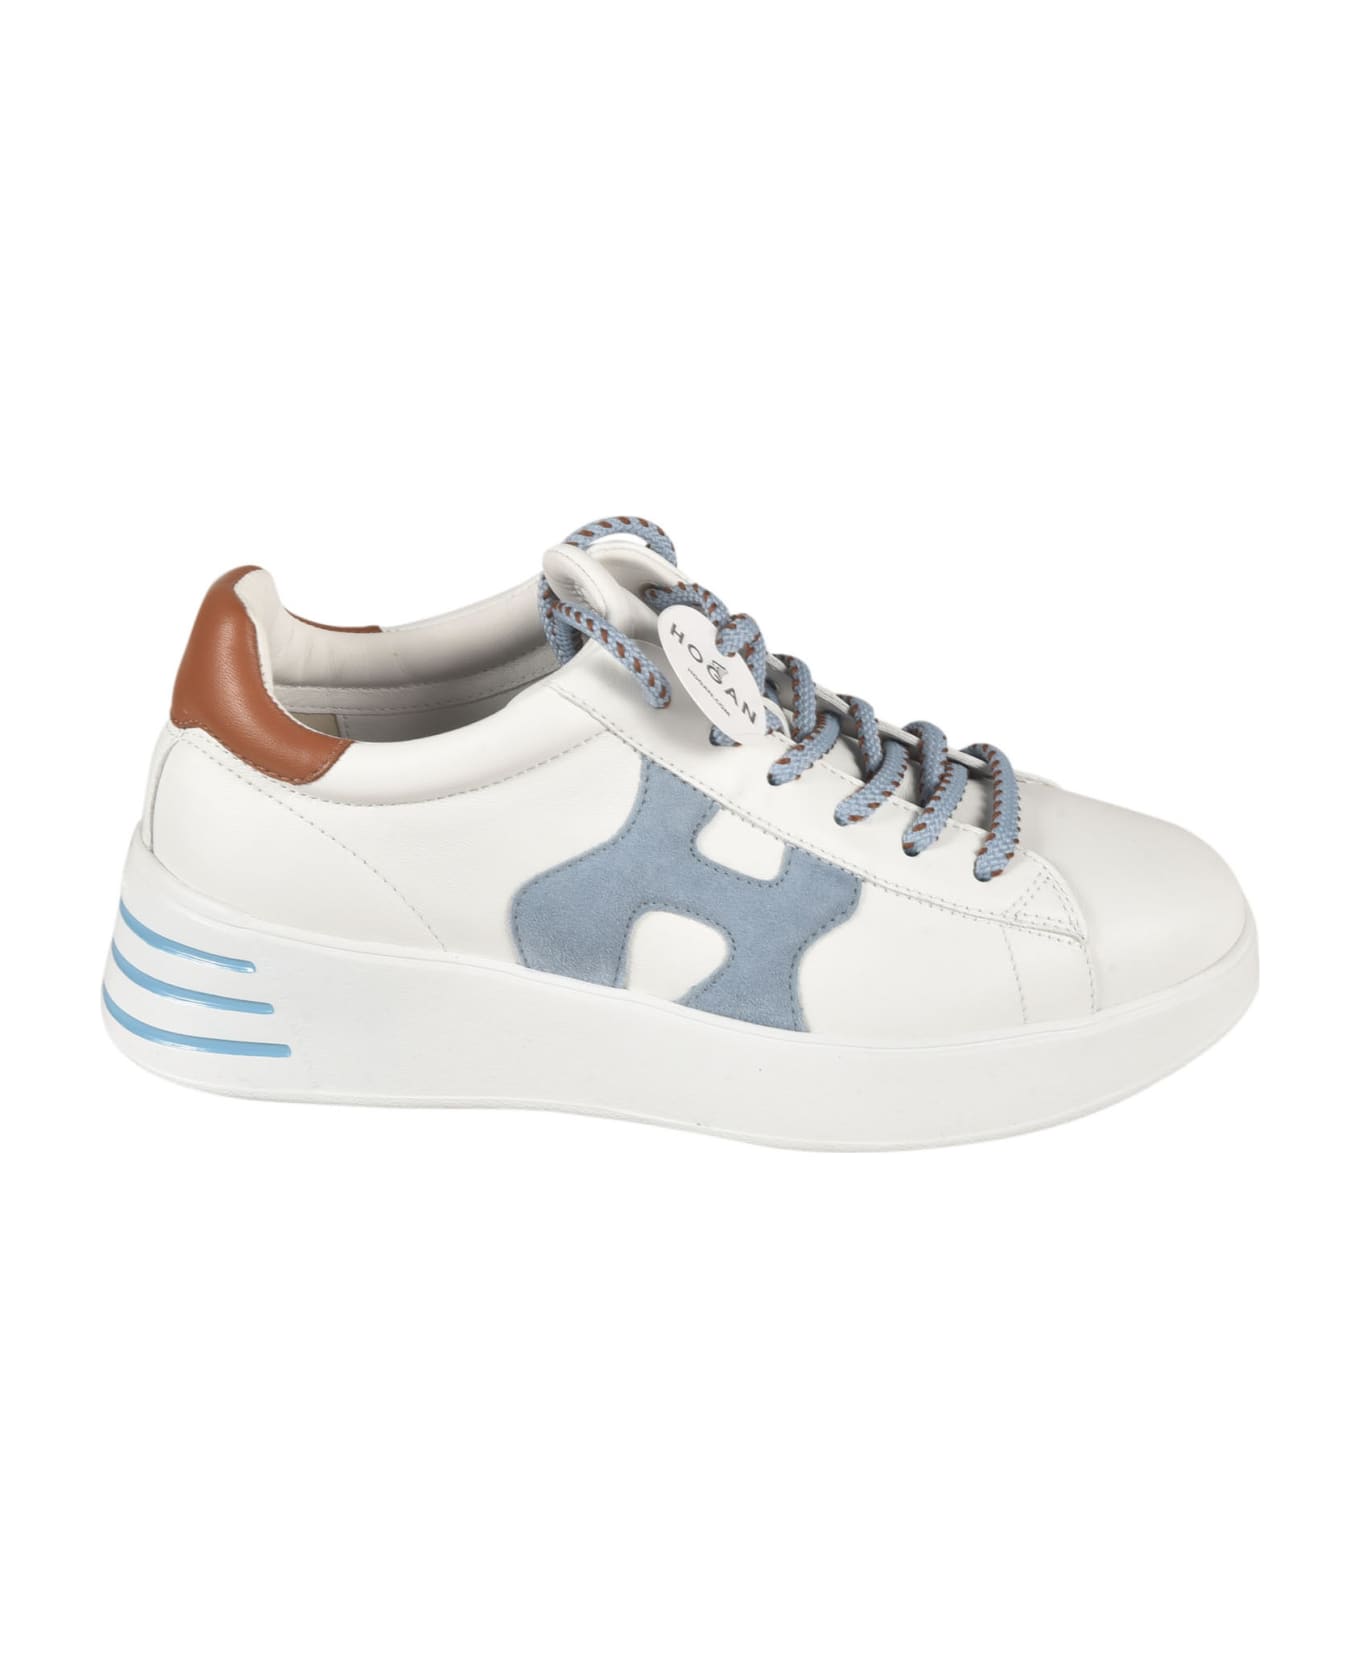 Hogan H564 Rebel Sneakers - White